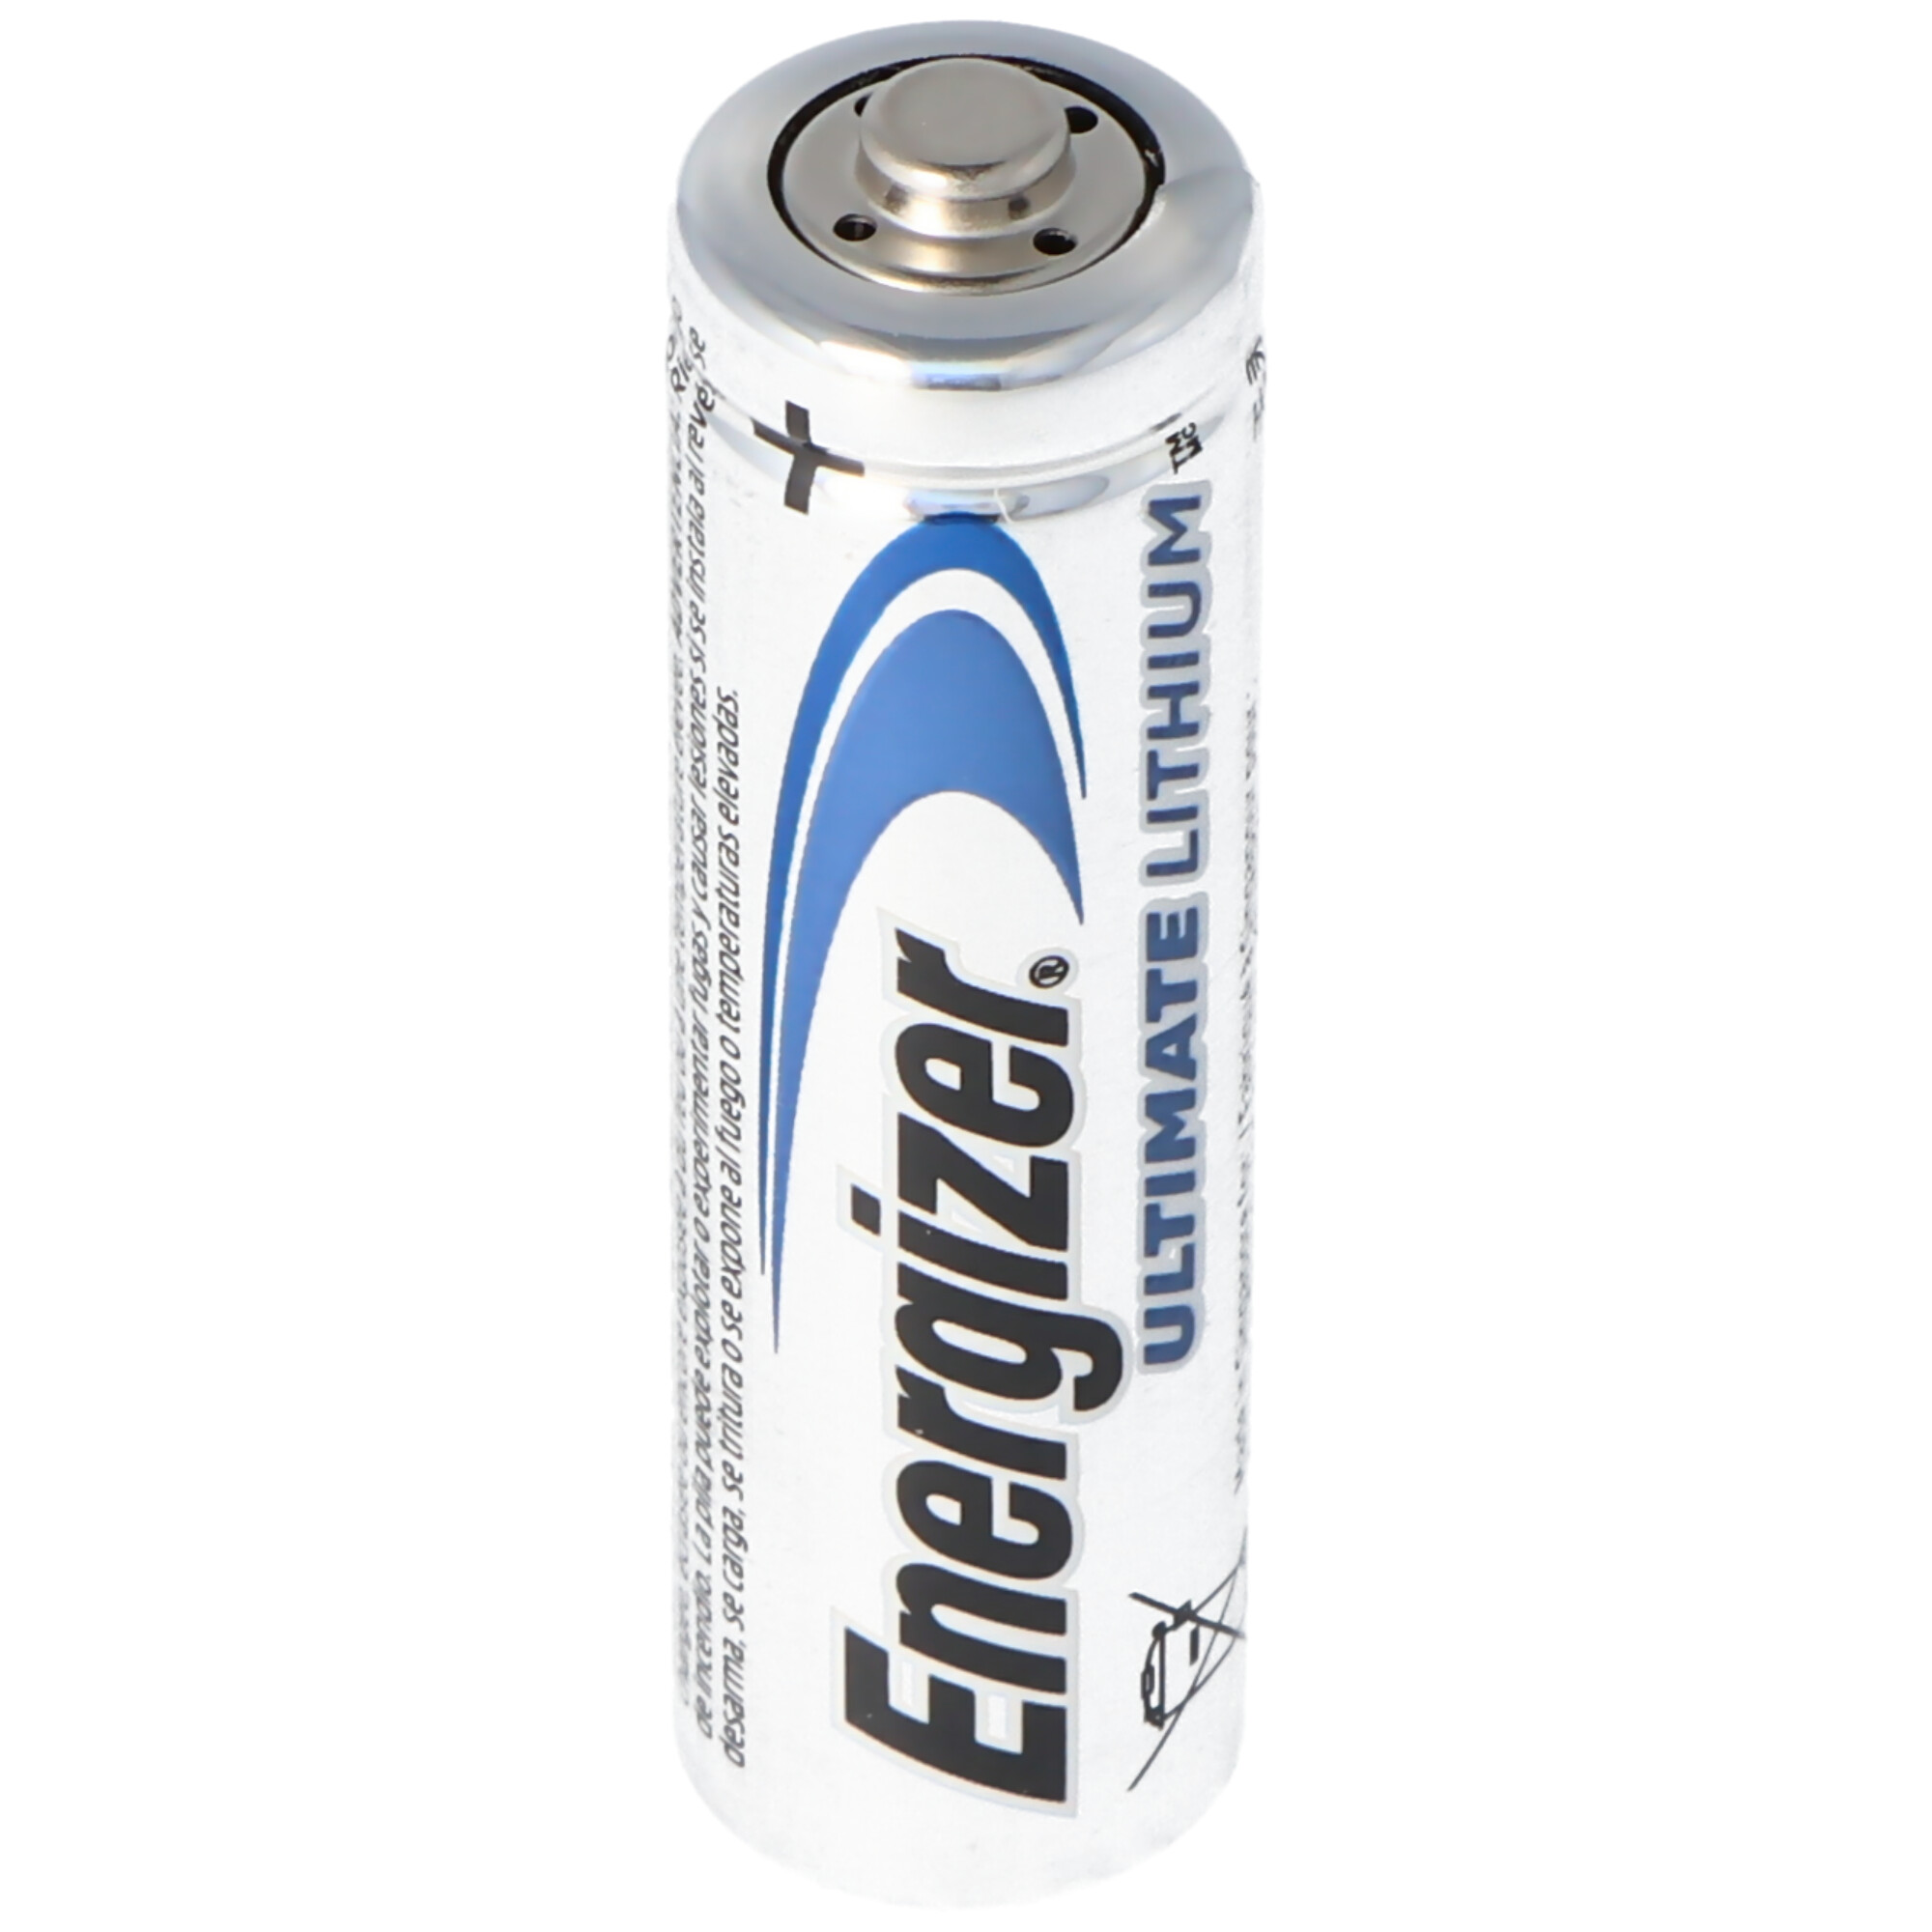 Energizer Ultimate Lithium Batterie 10er Box Energizer AA Batterie 1,5 Volt Batterie Energizer Ultimate Lithium AA 3100mAh